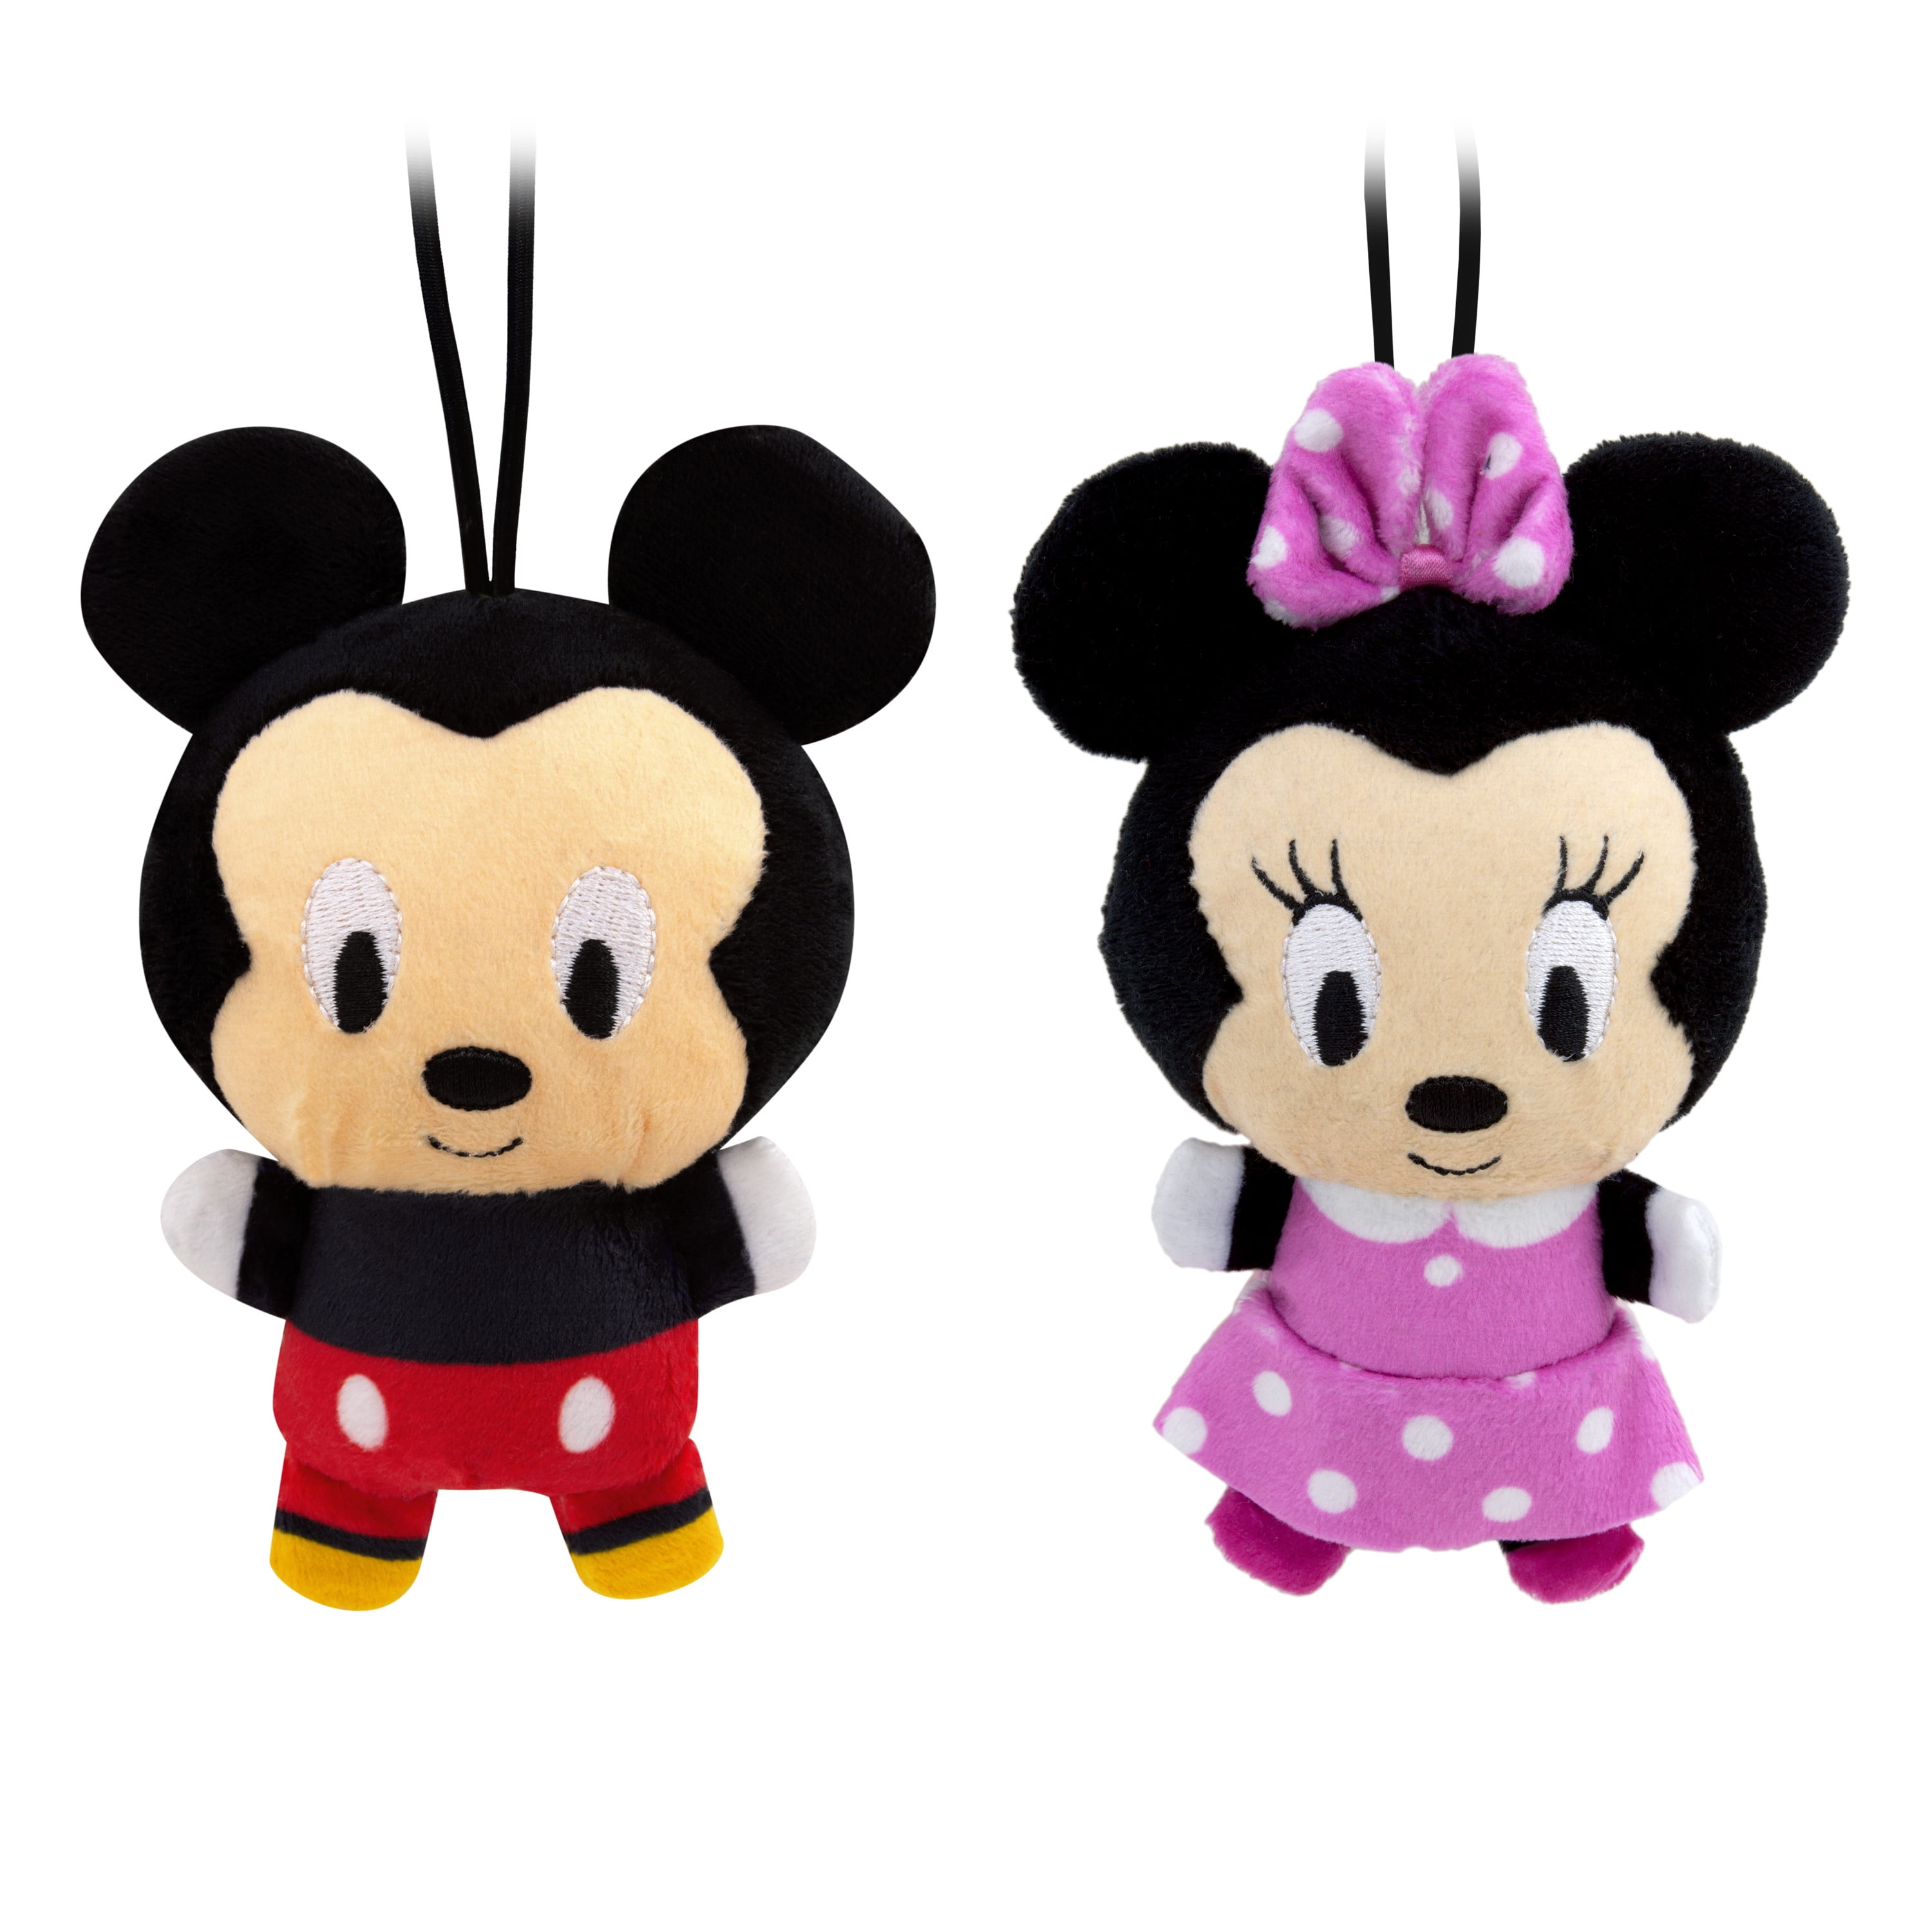 Vrijgevigheid Embryo Golf Hallmark Ornaments (Disney Mickey Mouse and Minnie Mouse Plush Fabric), Set  of 2 - Walmart.com